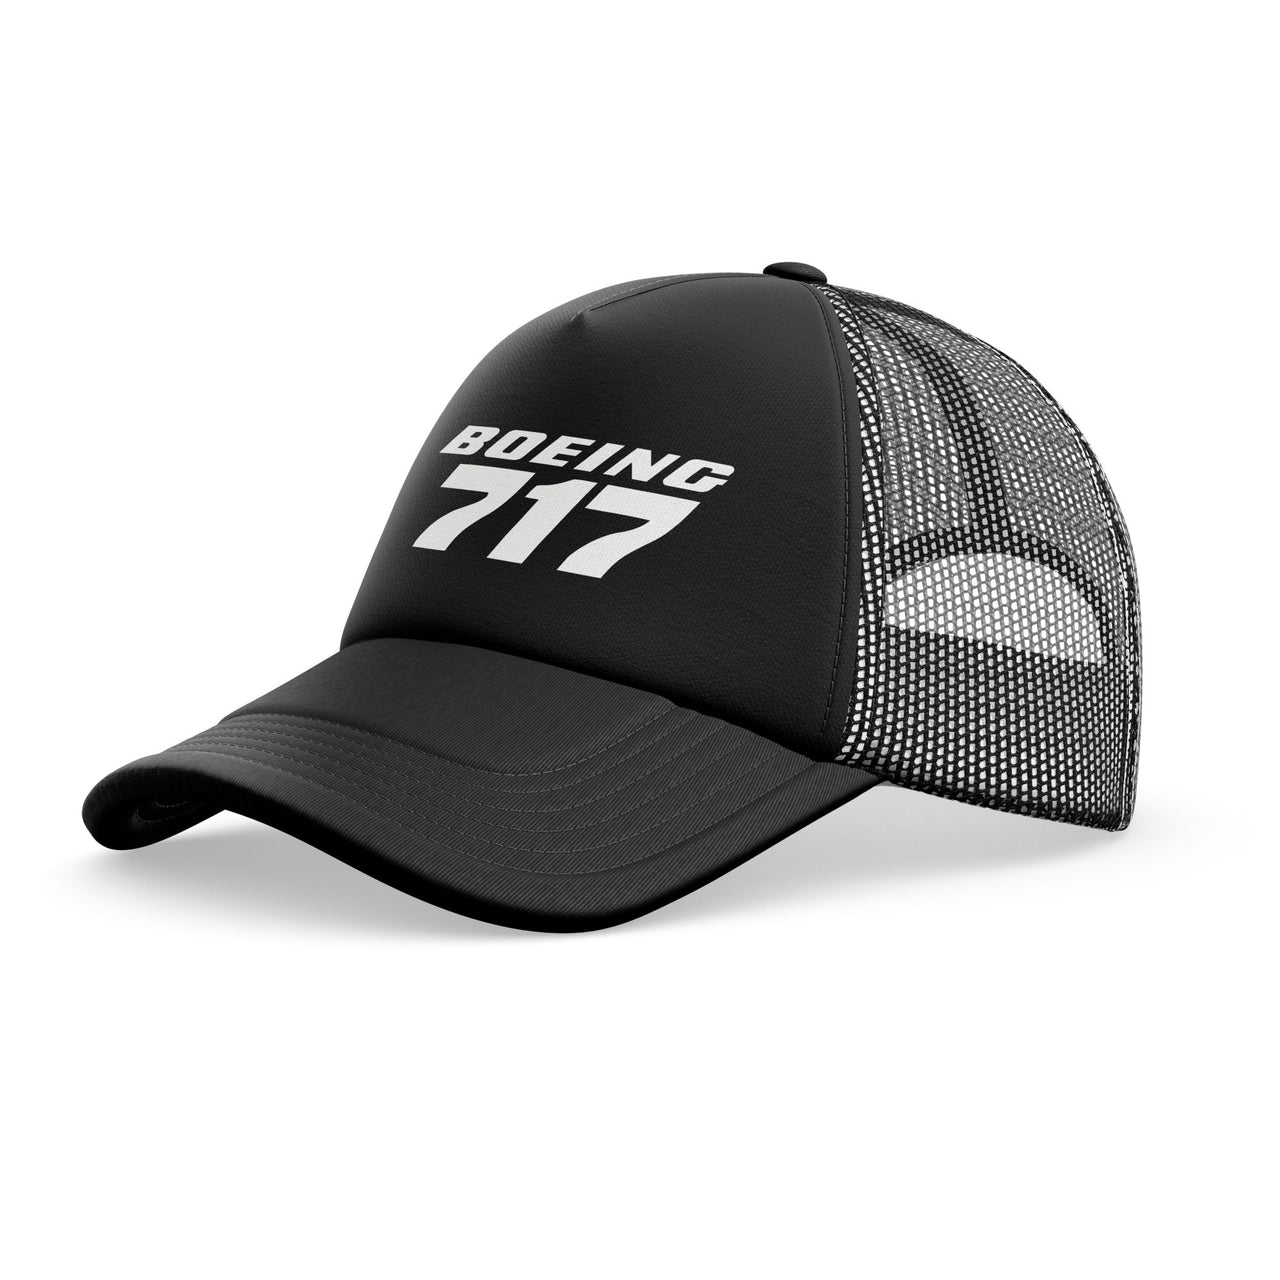 Boeing 717 & Text Designed Trucker Caps & Hats